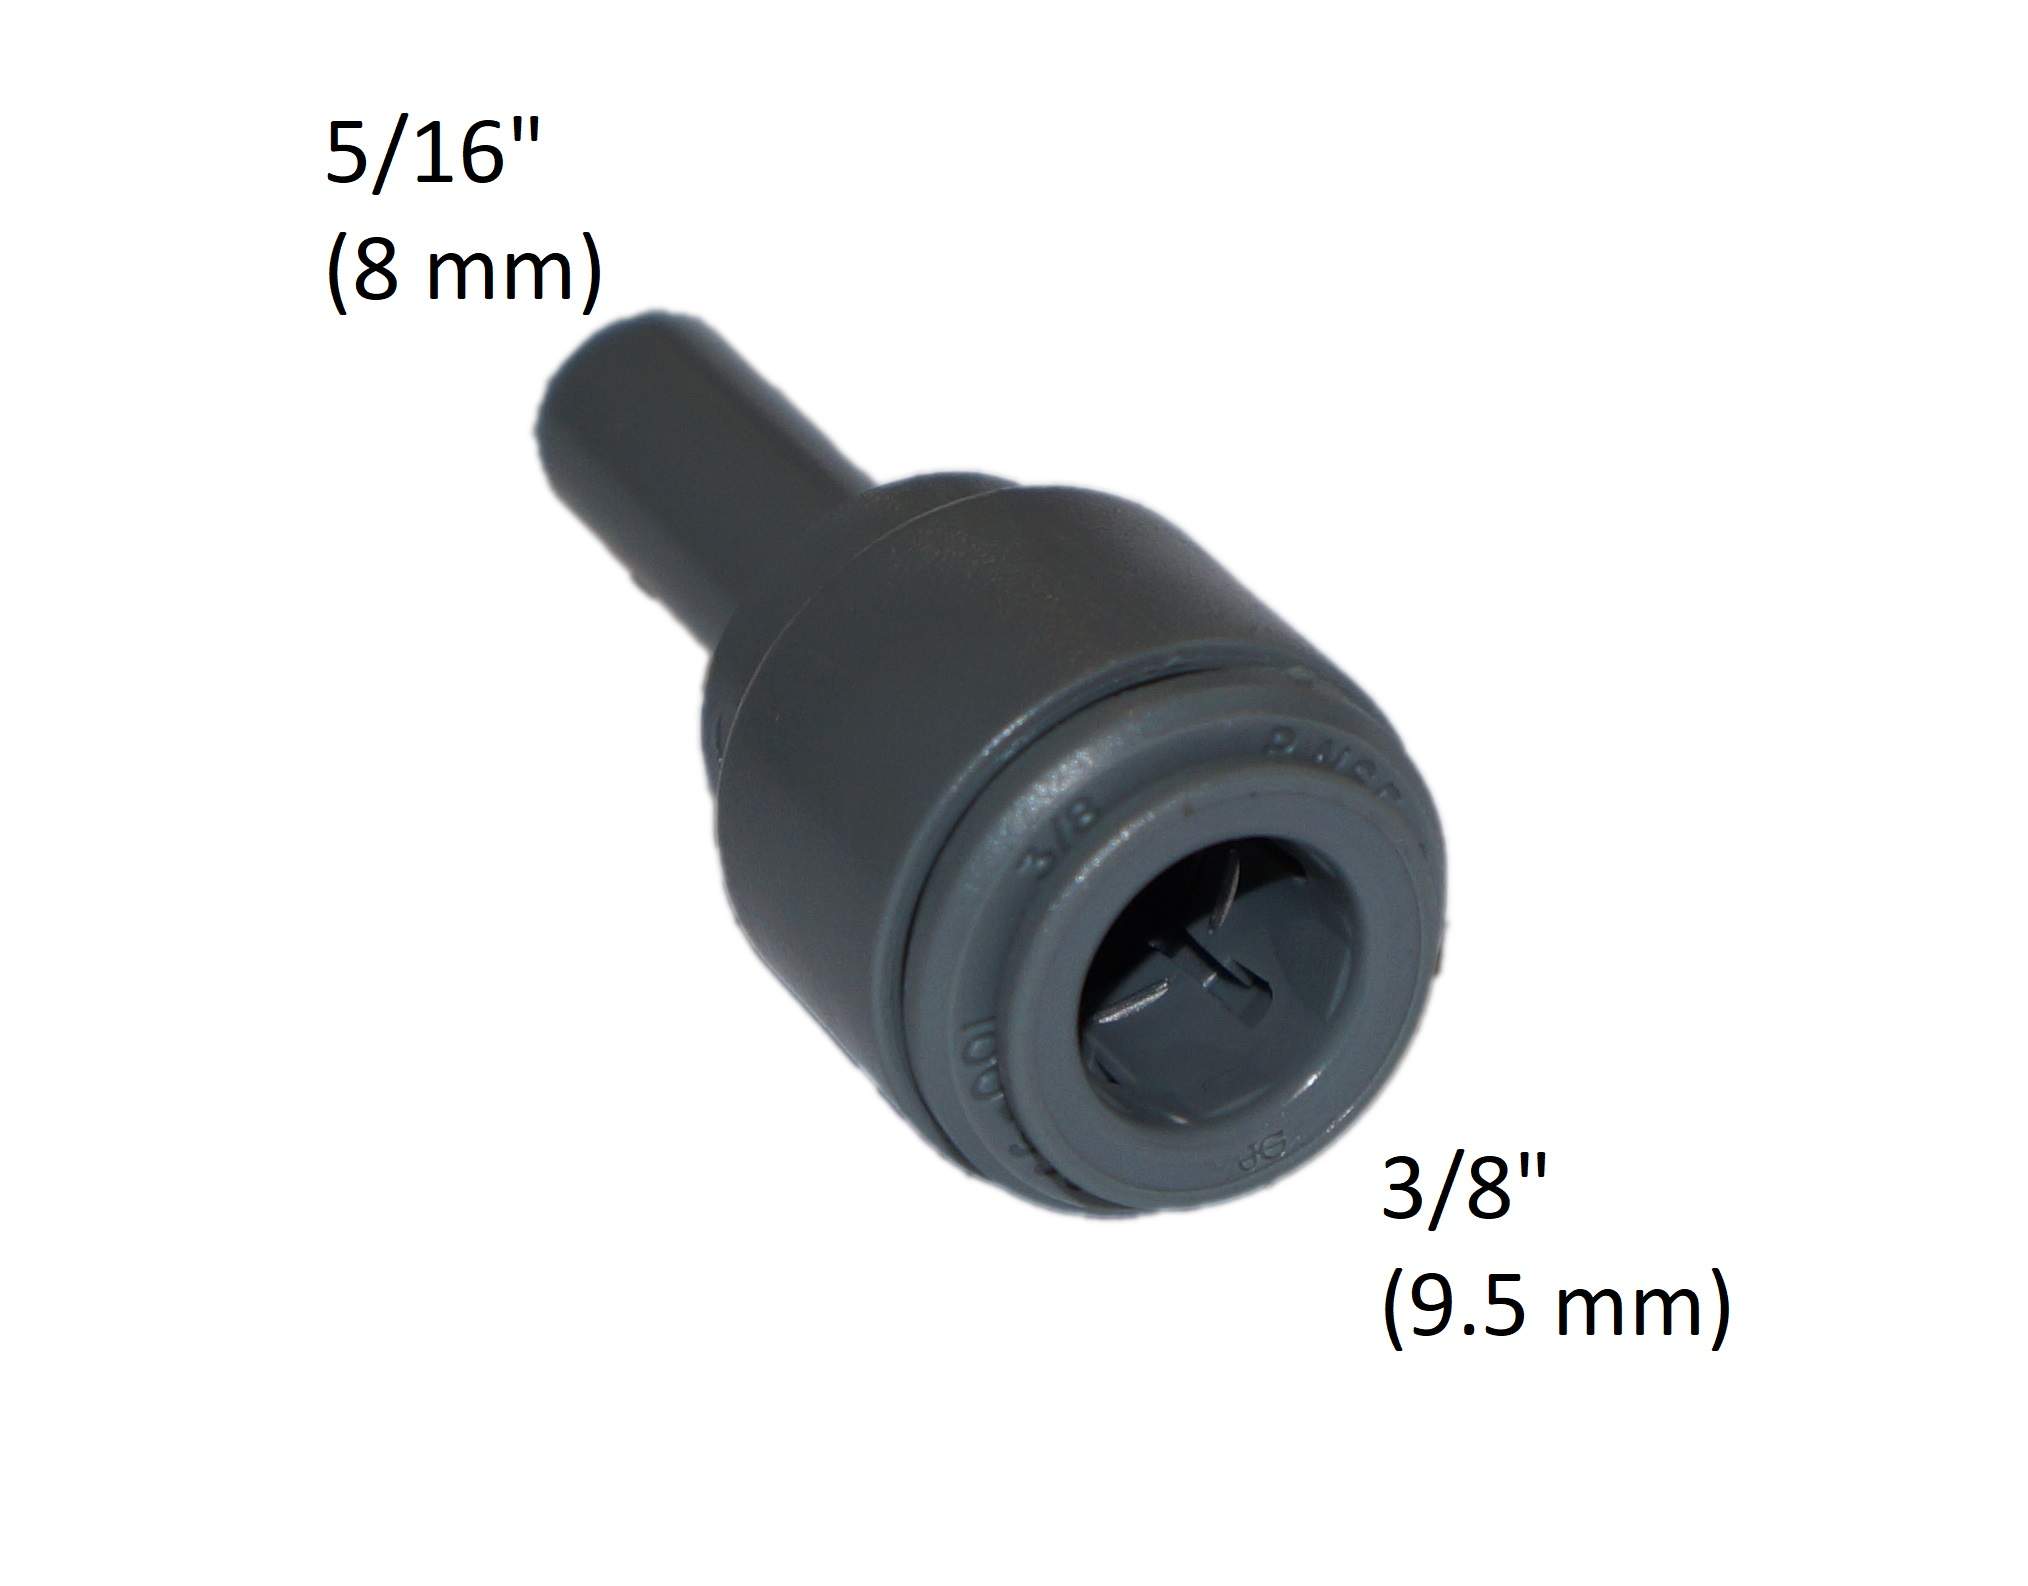 Raccord d'accouplement pour tube 3/8" (9.5 mm) vers douille 5/16" (8 mm)